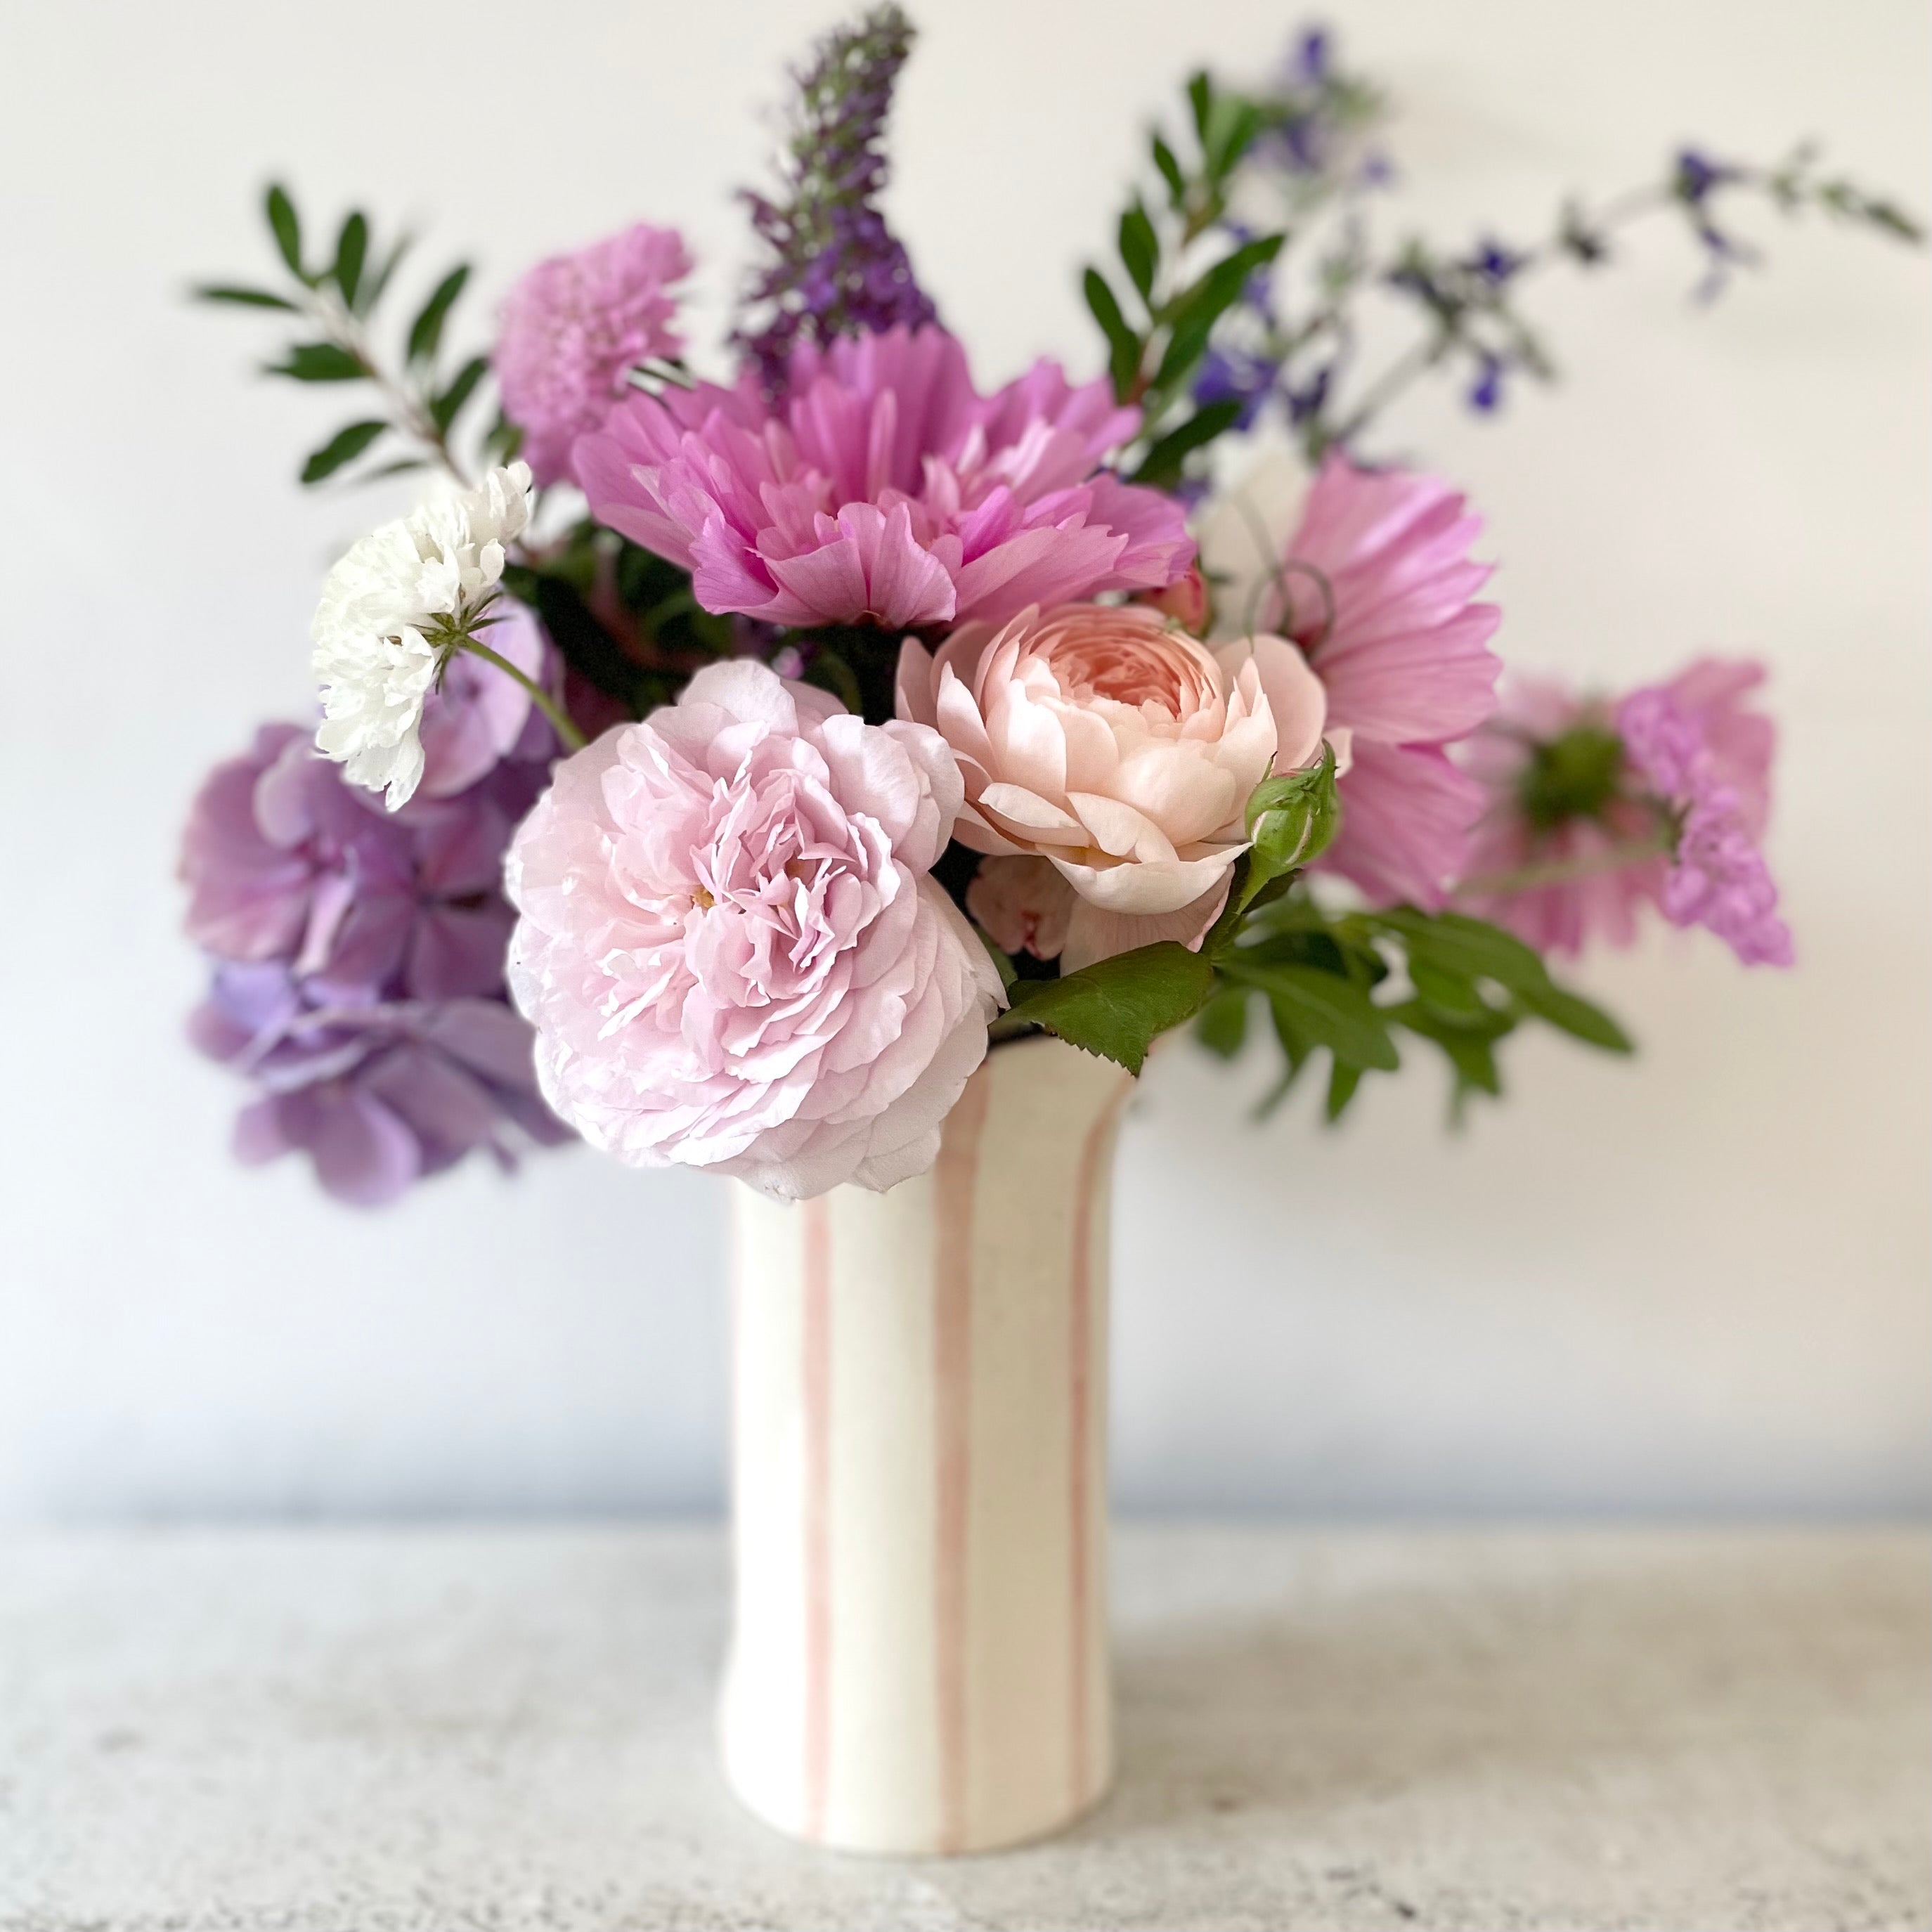 Daisy Scalloped Earthenware Vase Pink